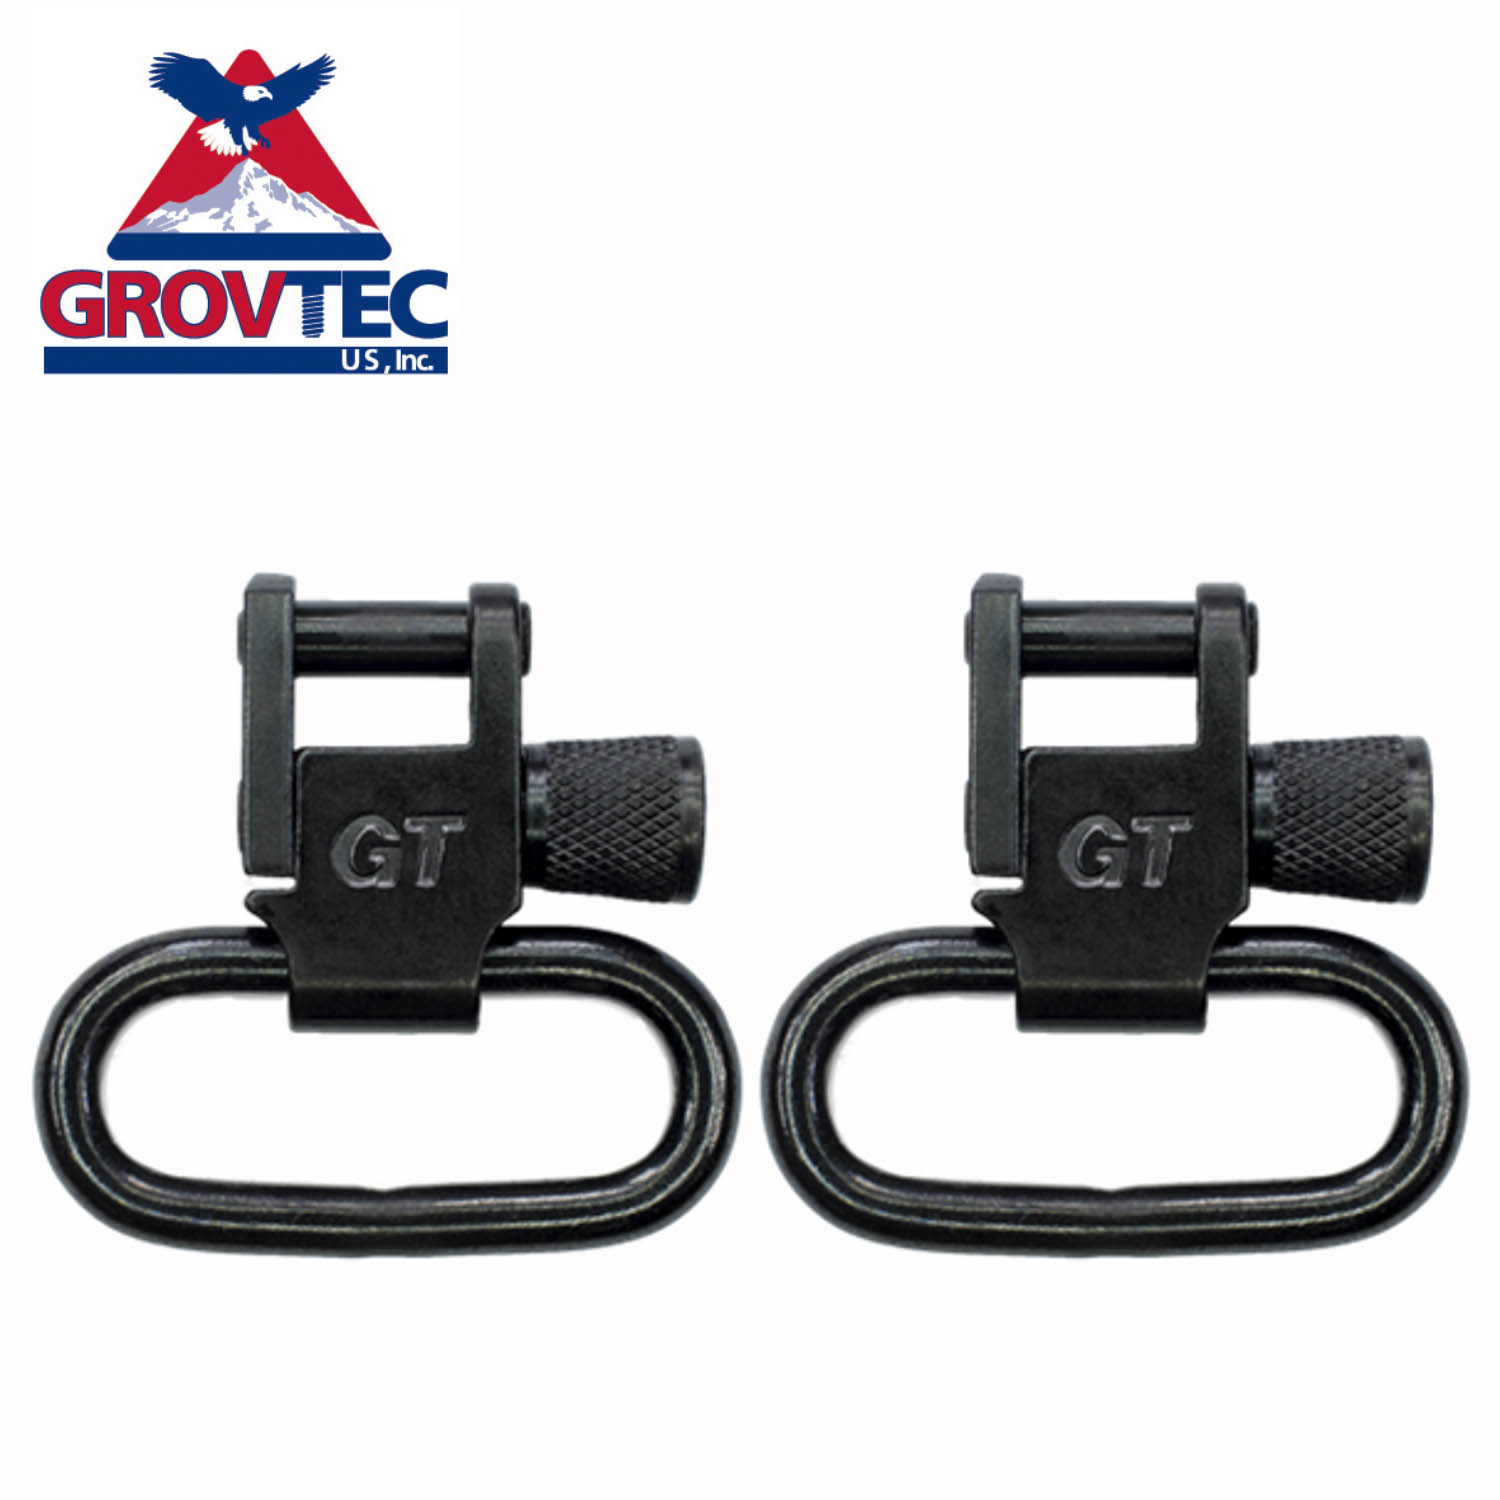 Grovtec 1 1/4" Locking Swivels Black Oxide Finish Free Spin Sleeves GTSW-02 